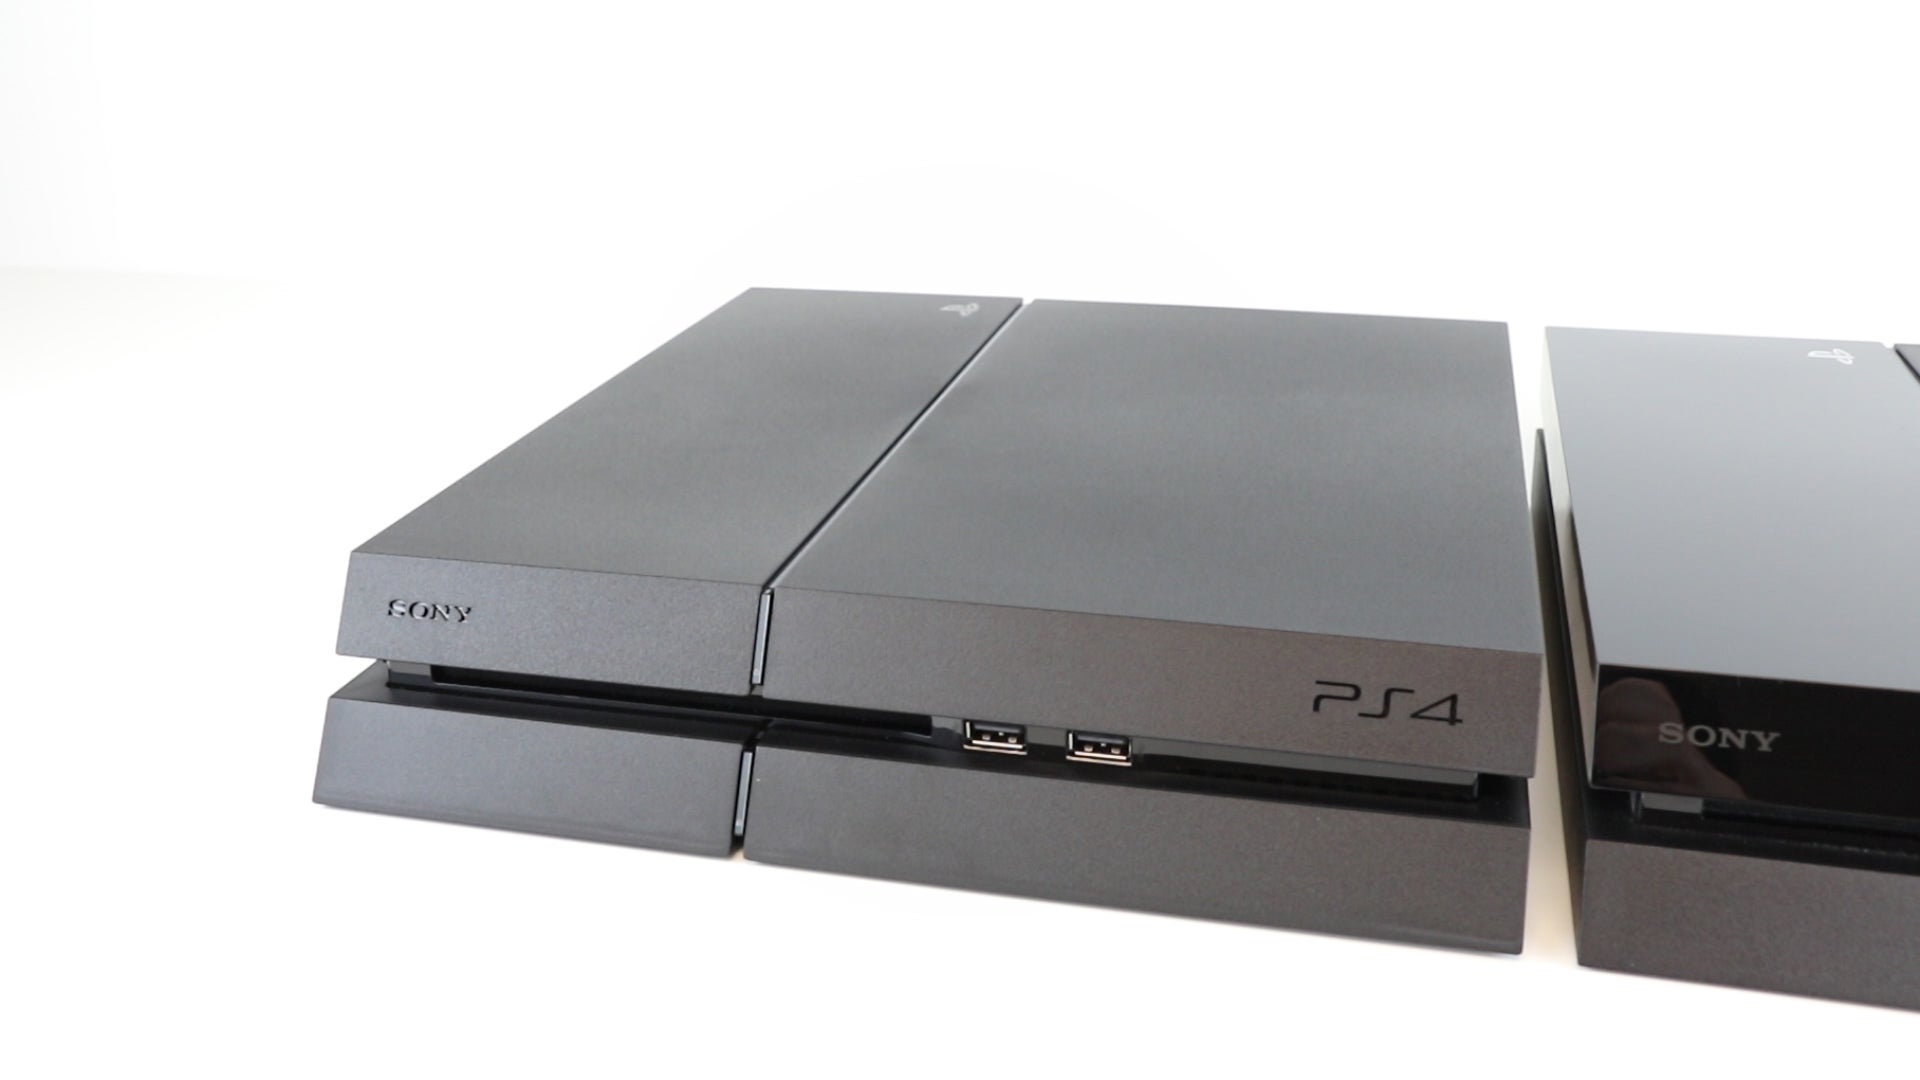 organisere underkjole Vellykket PlayStation 4 CUH-1200 'C-Chassis' review | Eurogamer.net